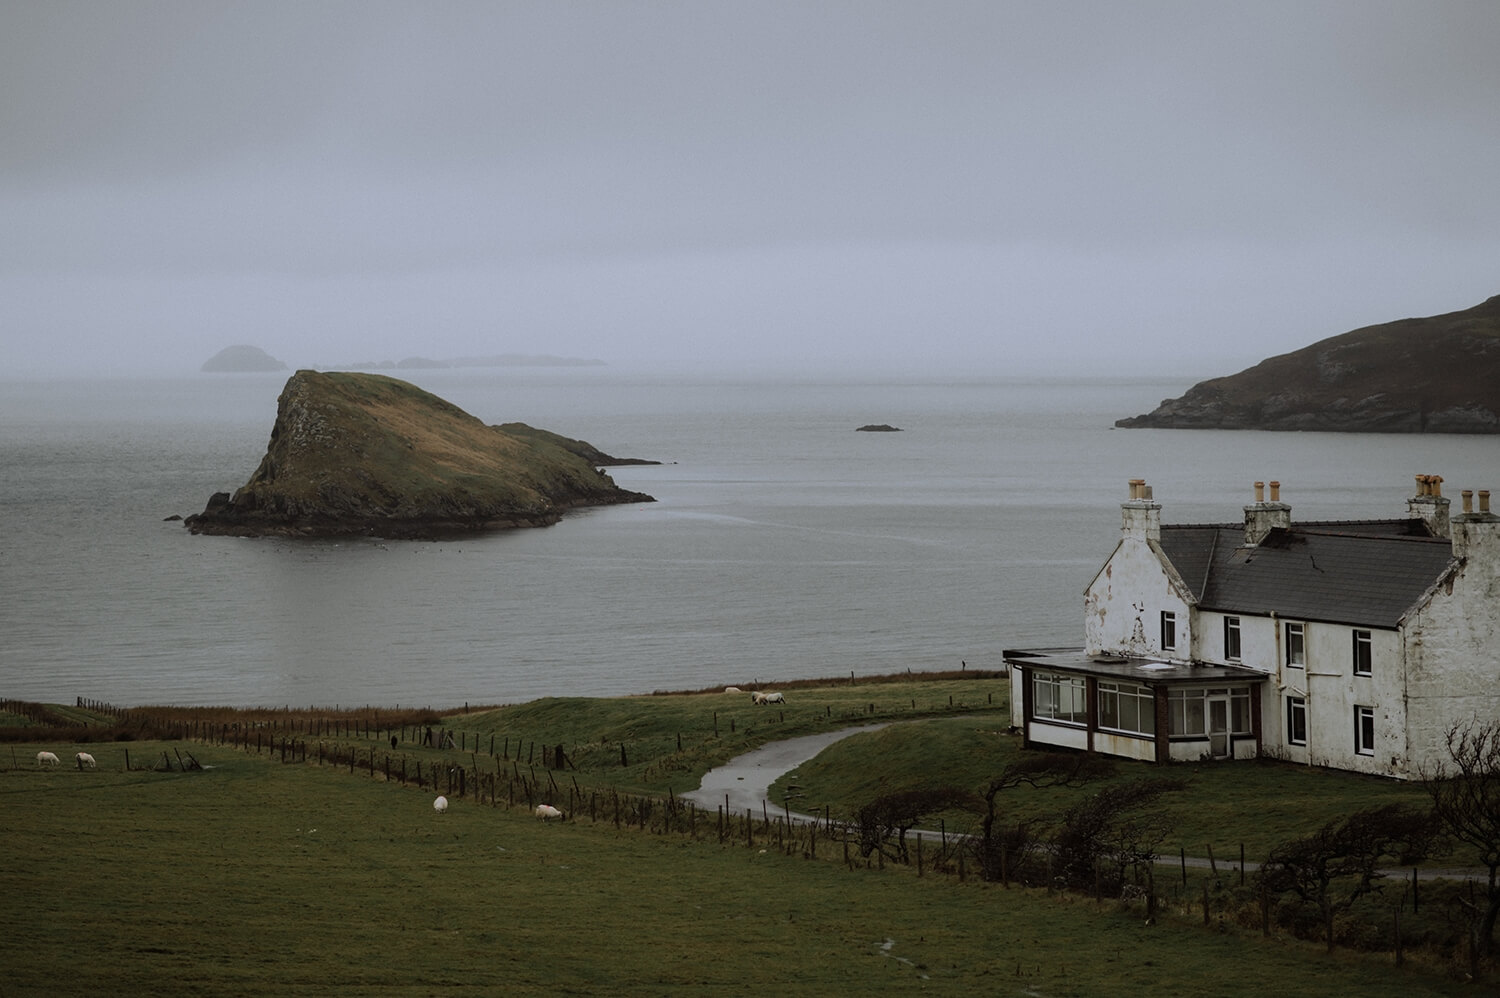 Photograph of some islands near the coast on the Isle of Skye.